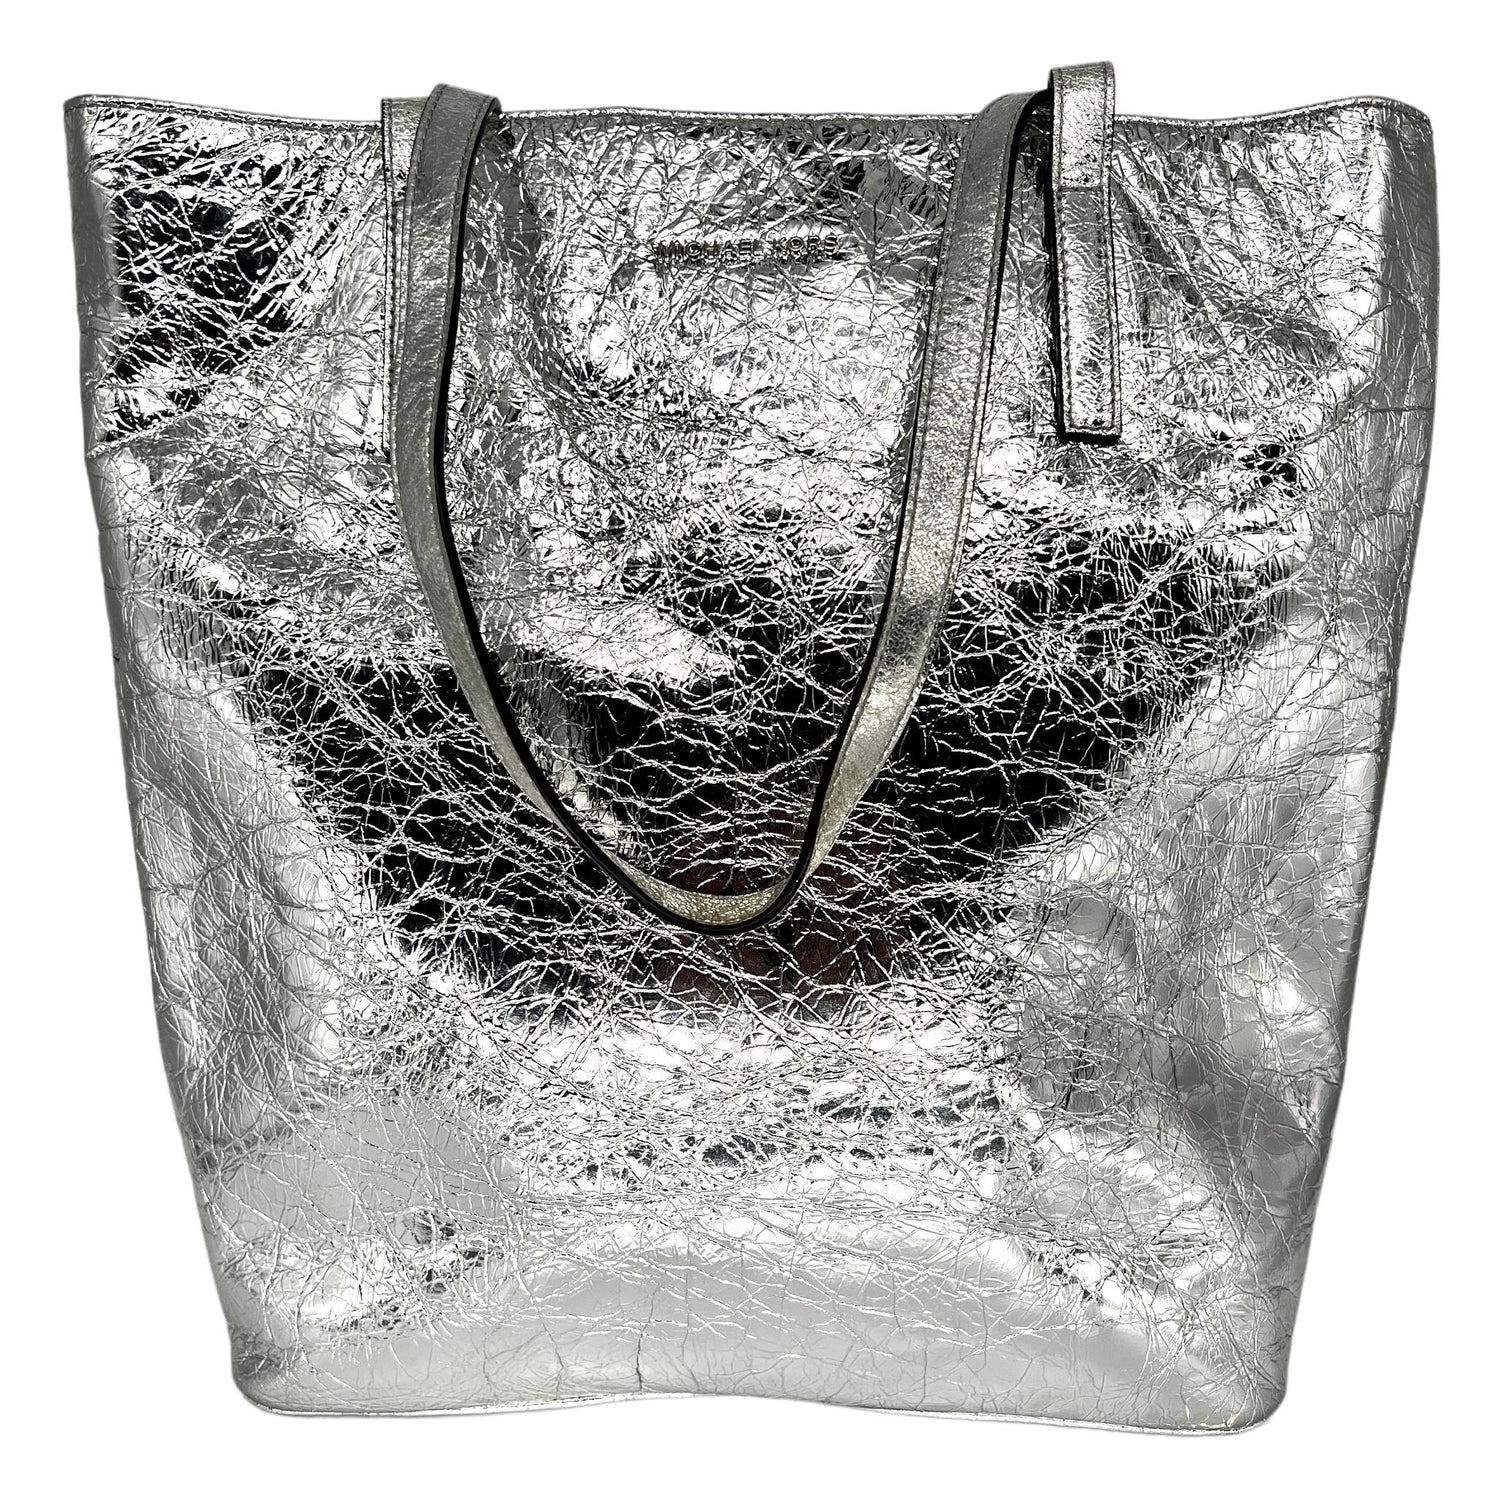 Discounted Authentic Luxury Designer Handbags & More – LovedLuxeBags